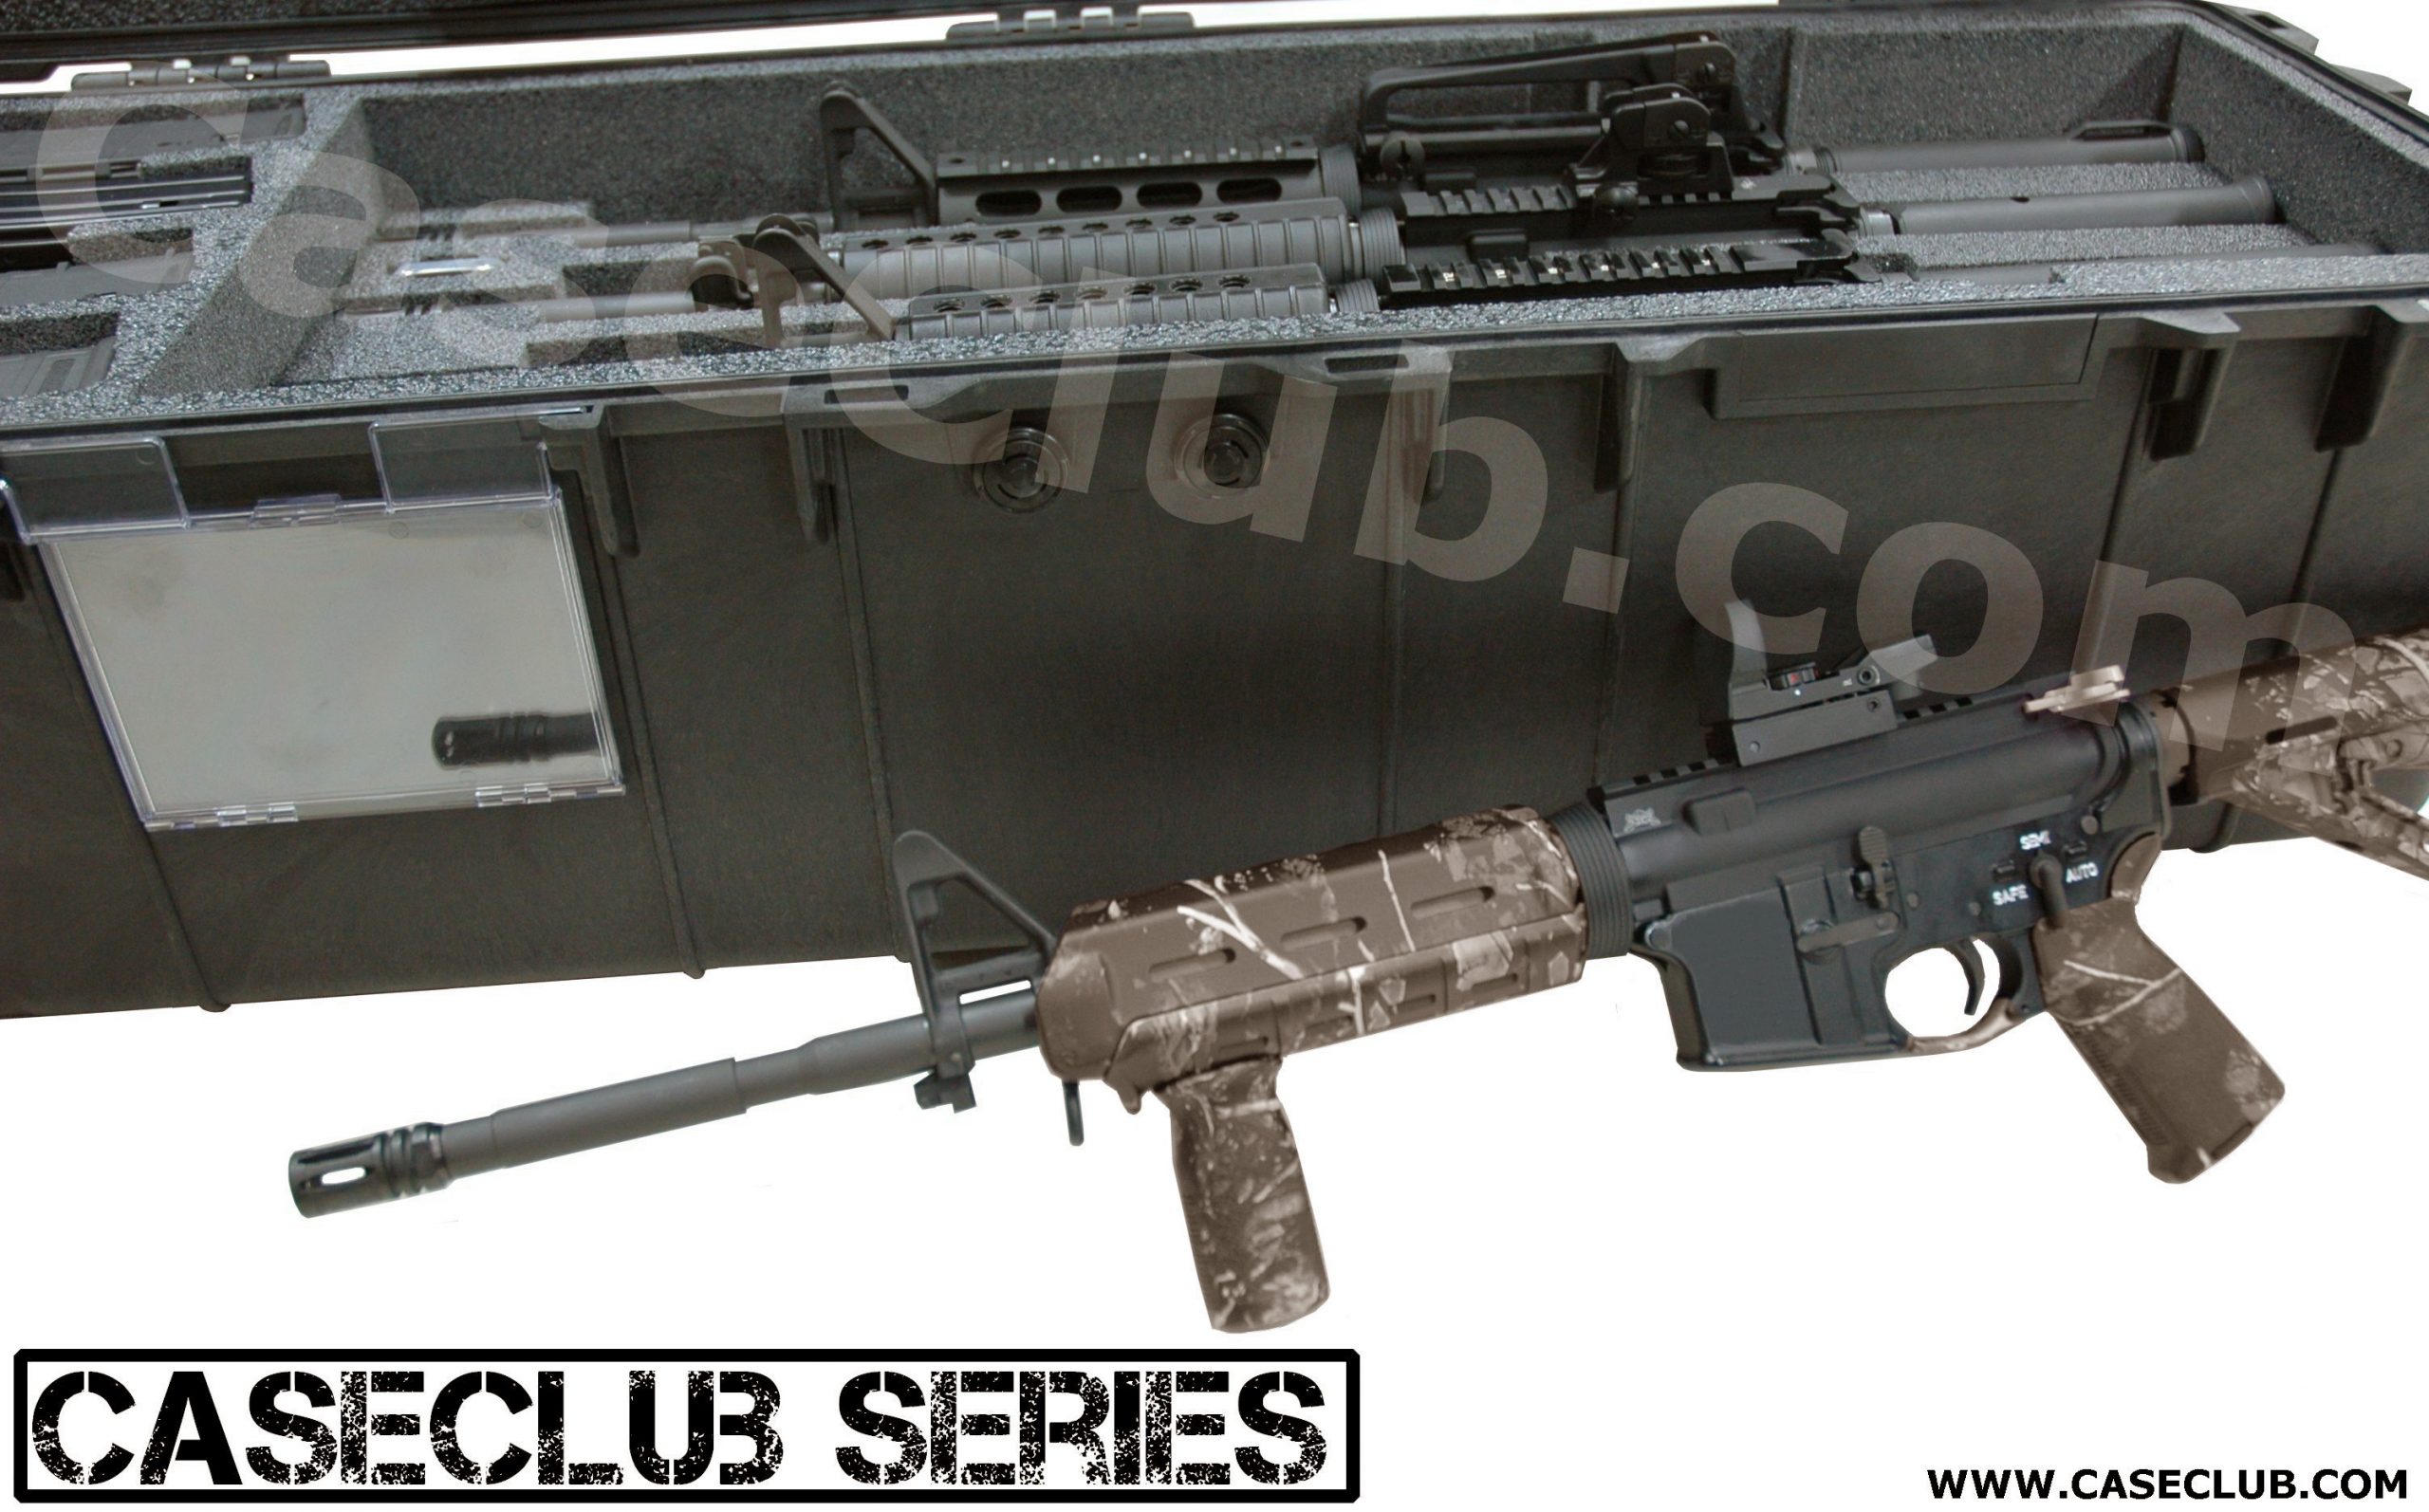 4 Ar15 Carbine Rifle Case Case Club Cases